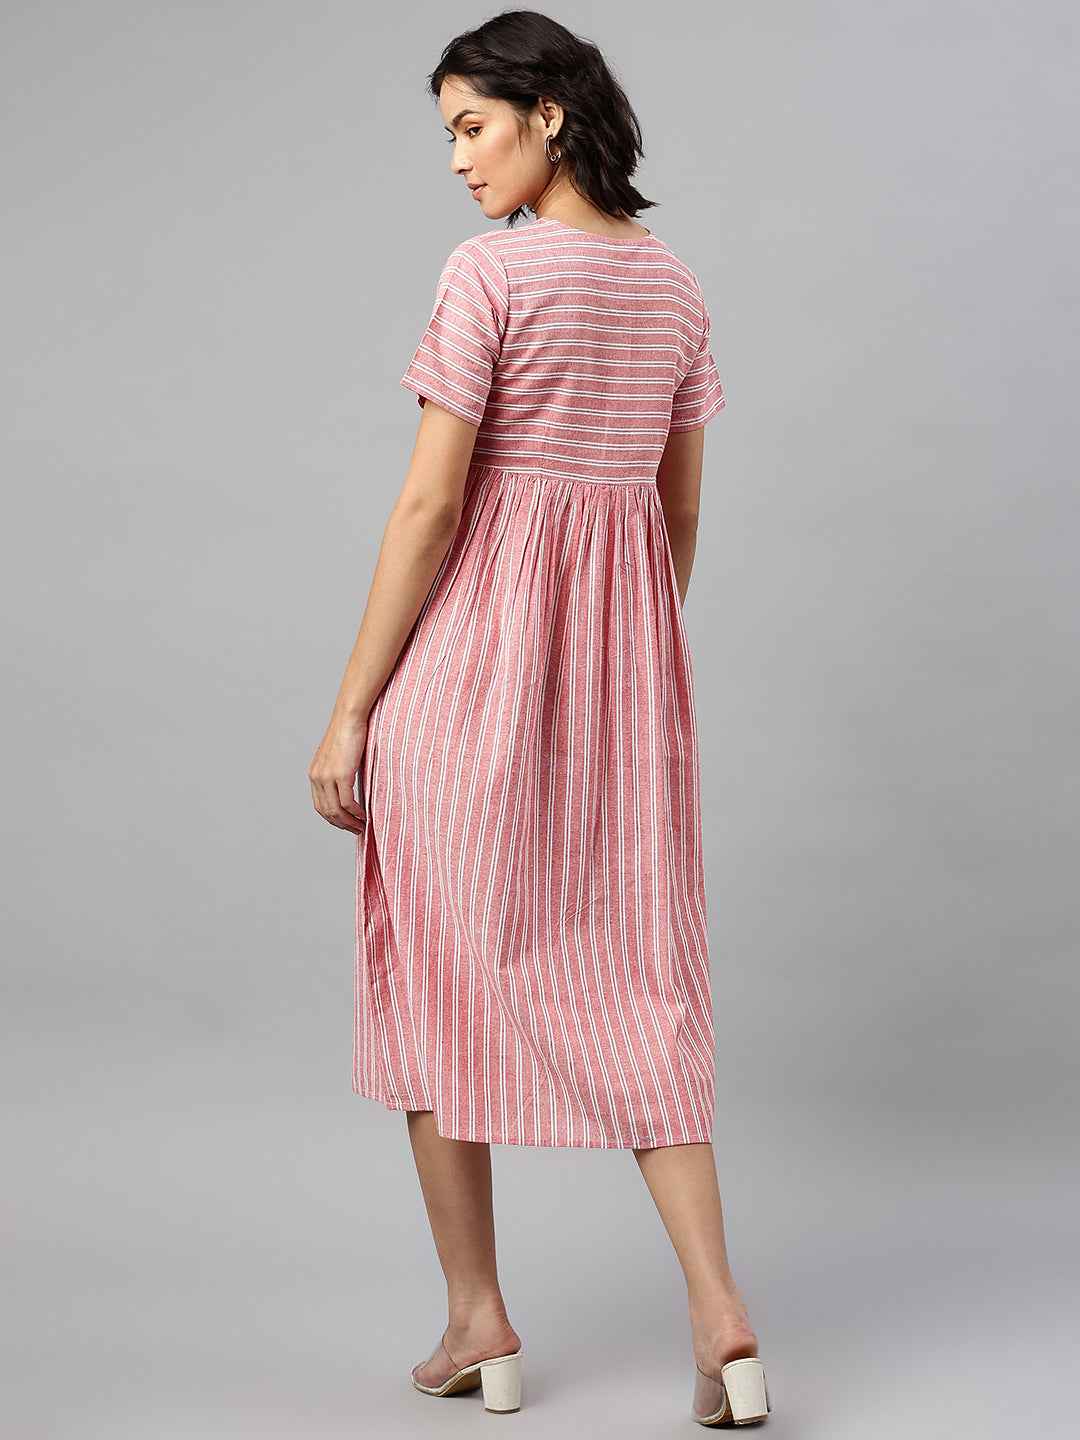 Cottinfab Red & White Striped A-Line Midi Dress